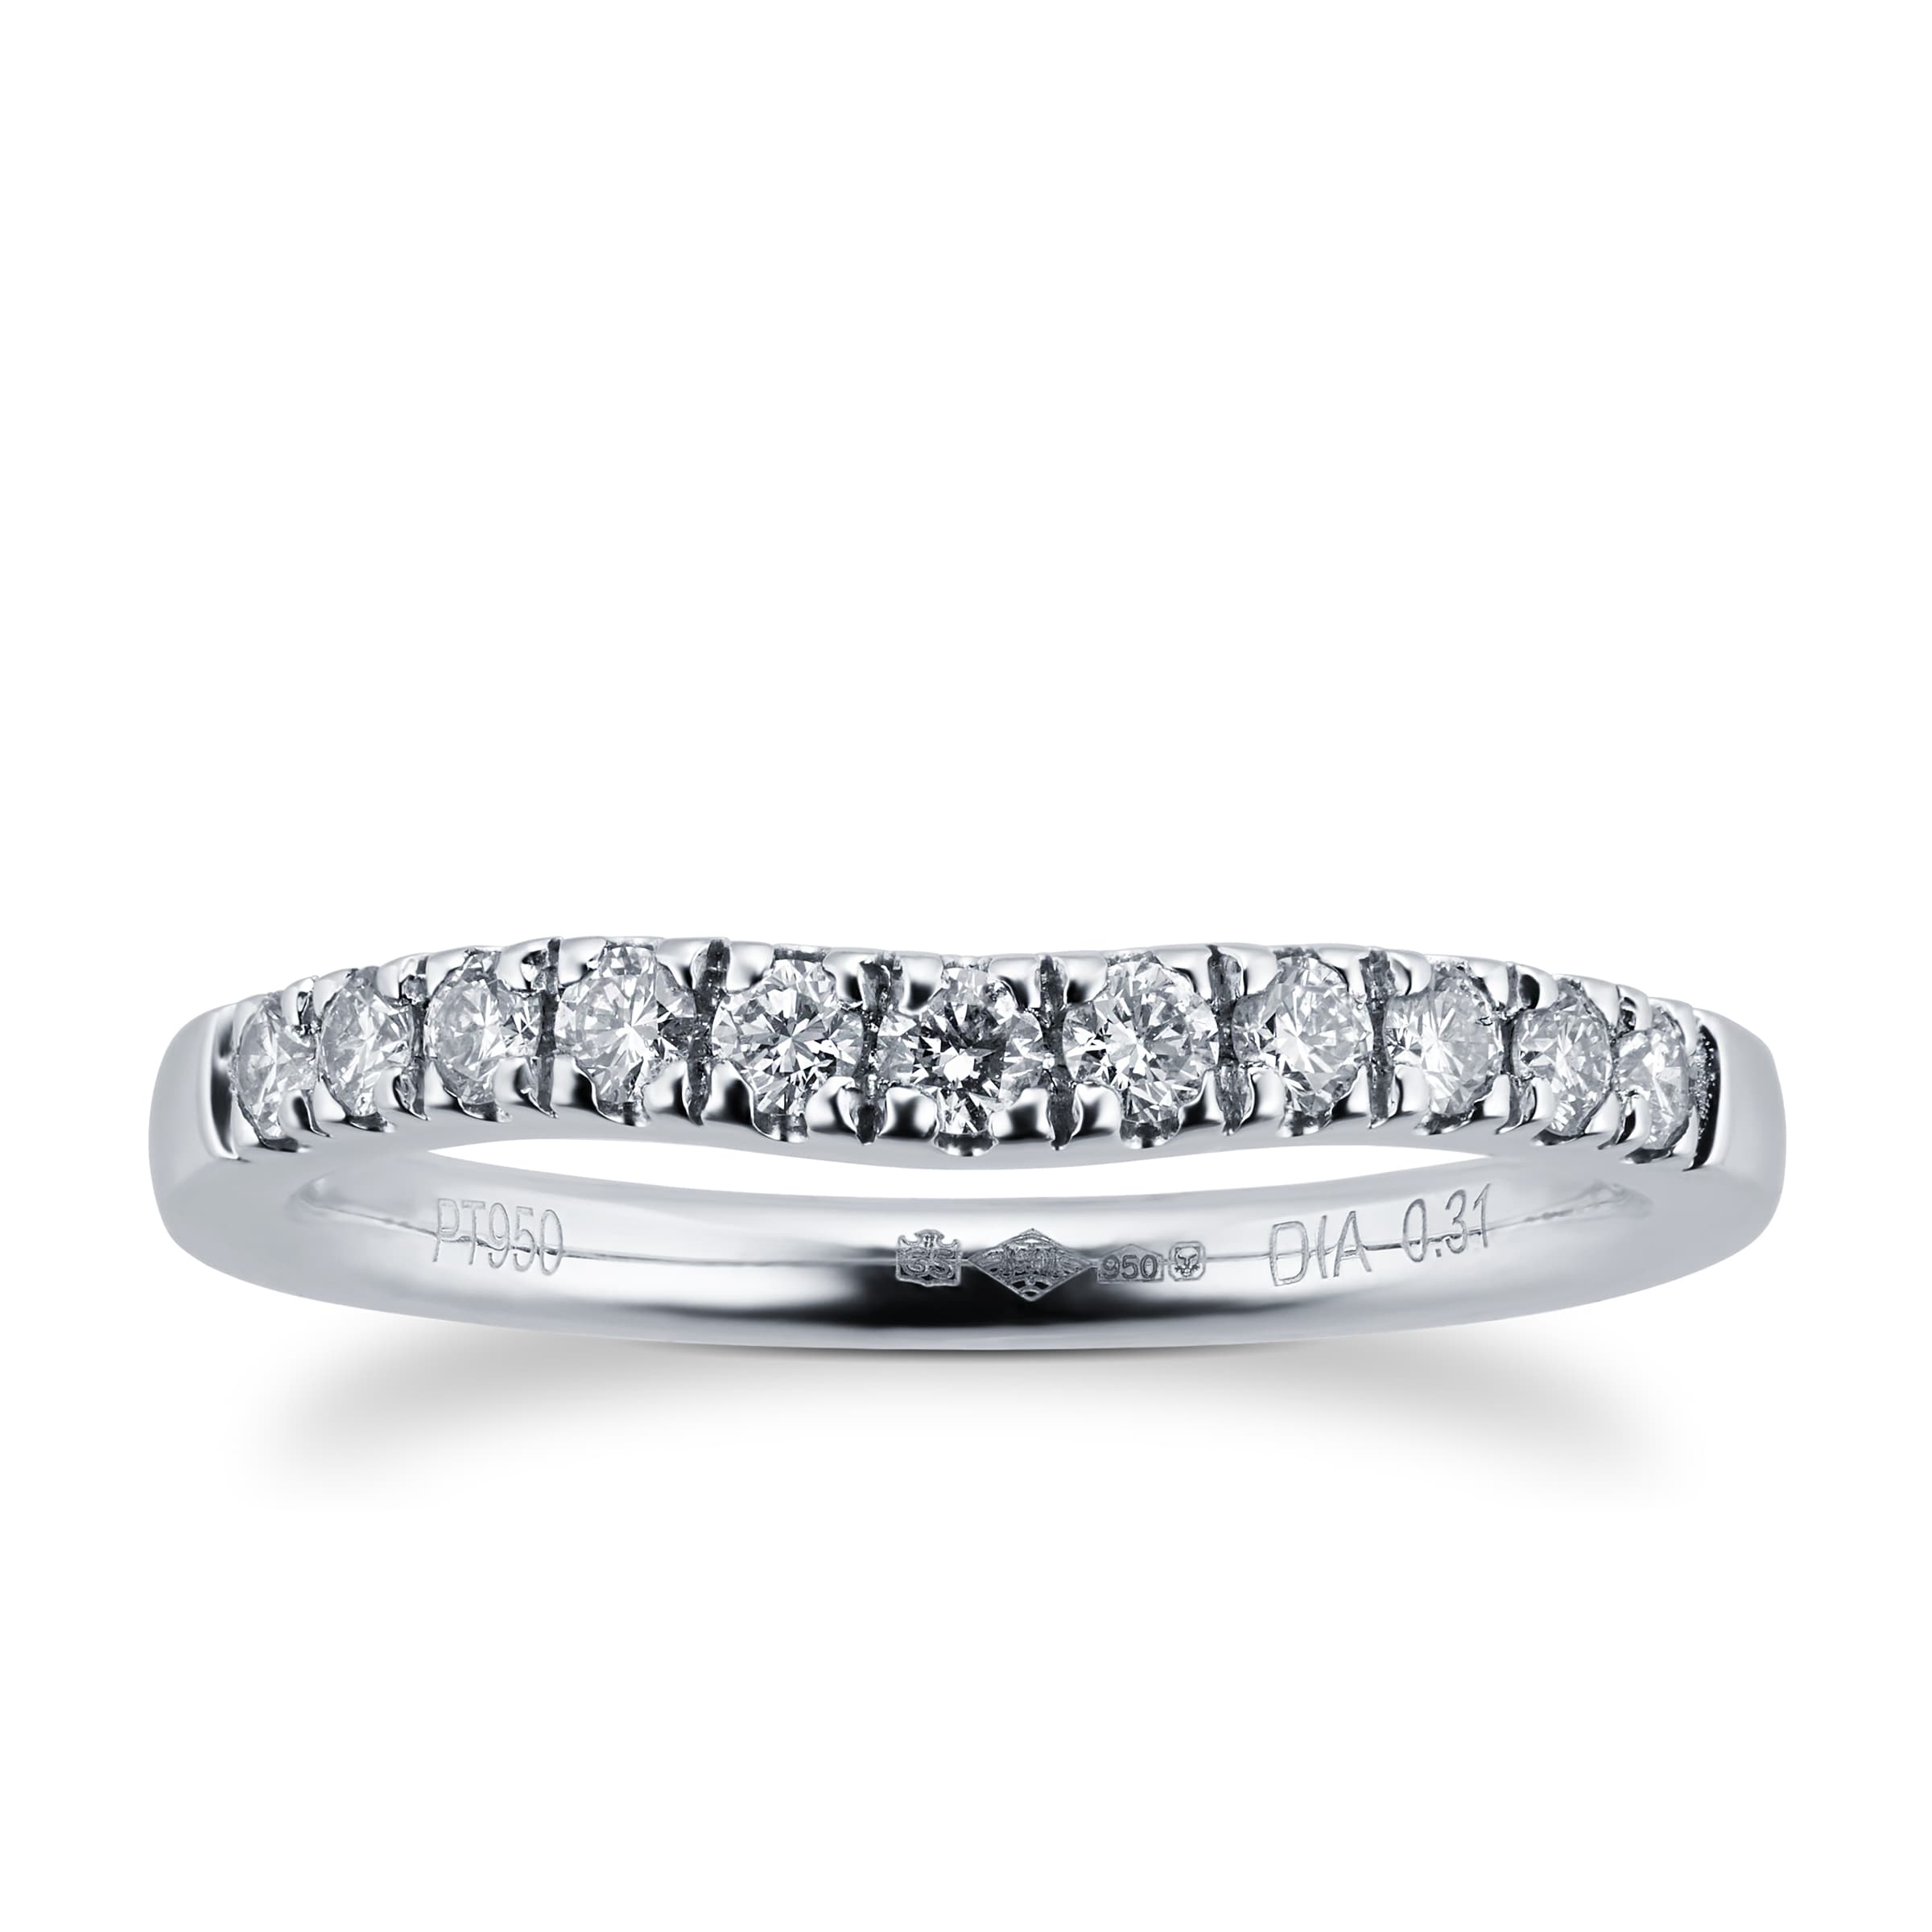 Brilliant Cut 0.31 Carat Total Weight Diamond Set Ladies Shaped Wedding Ring In Platinum - Ring Size P